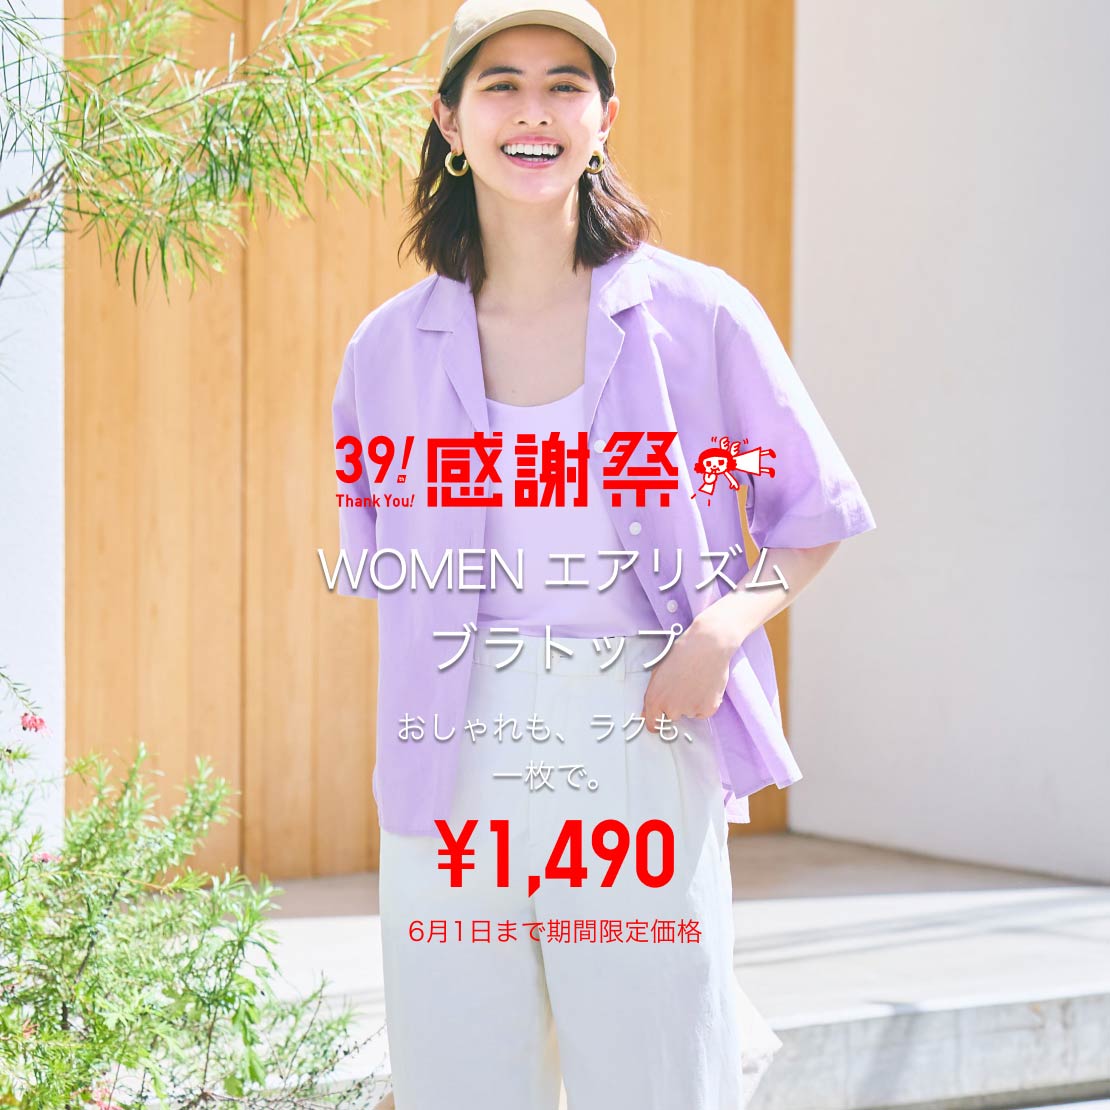 WOMEN エアリズムブラトップ ¥1,490 6月1日まで期間限定価格